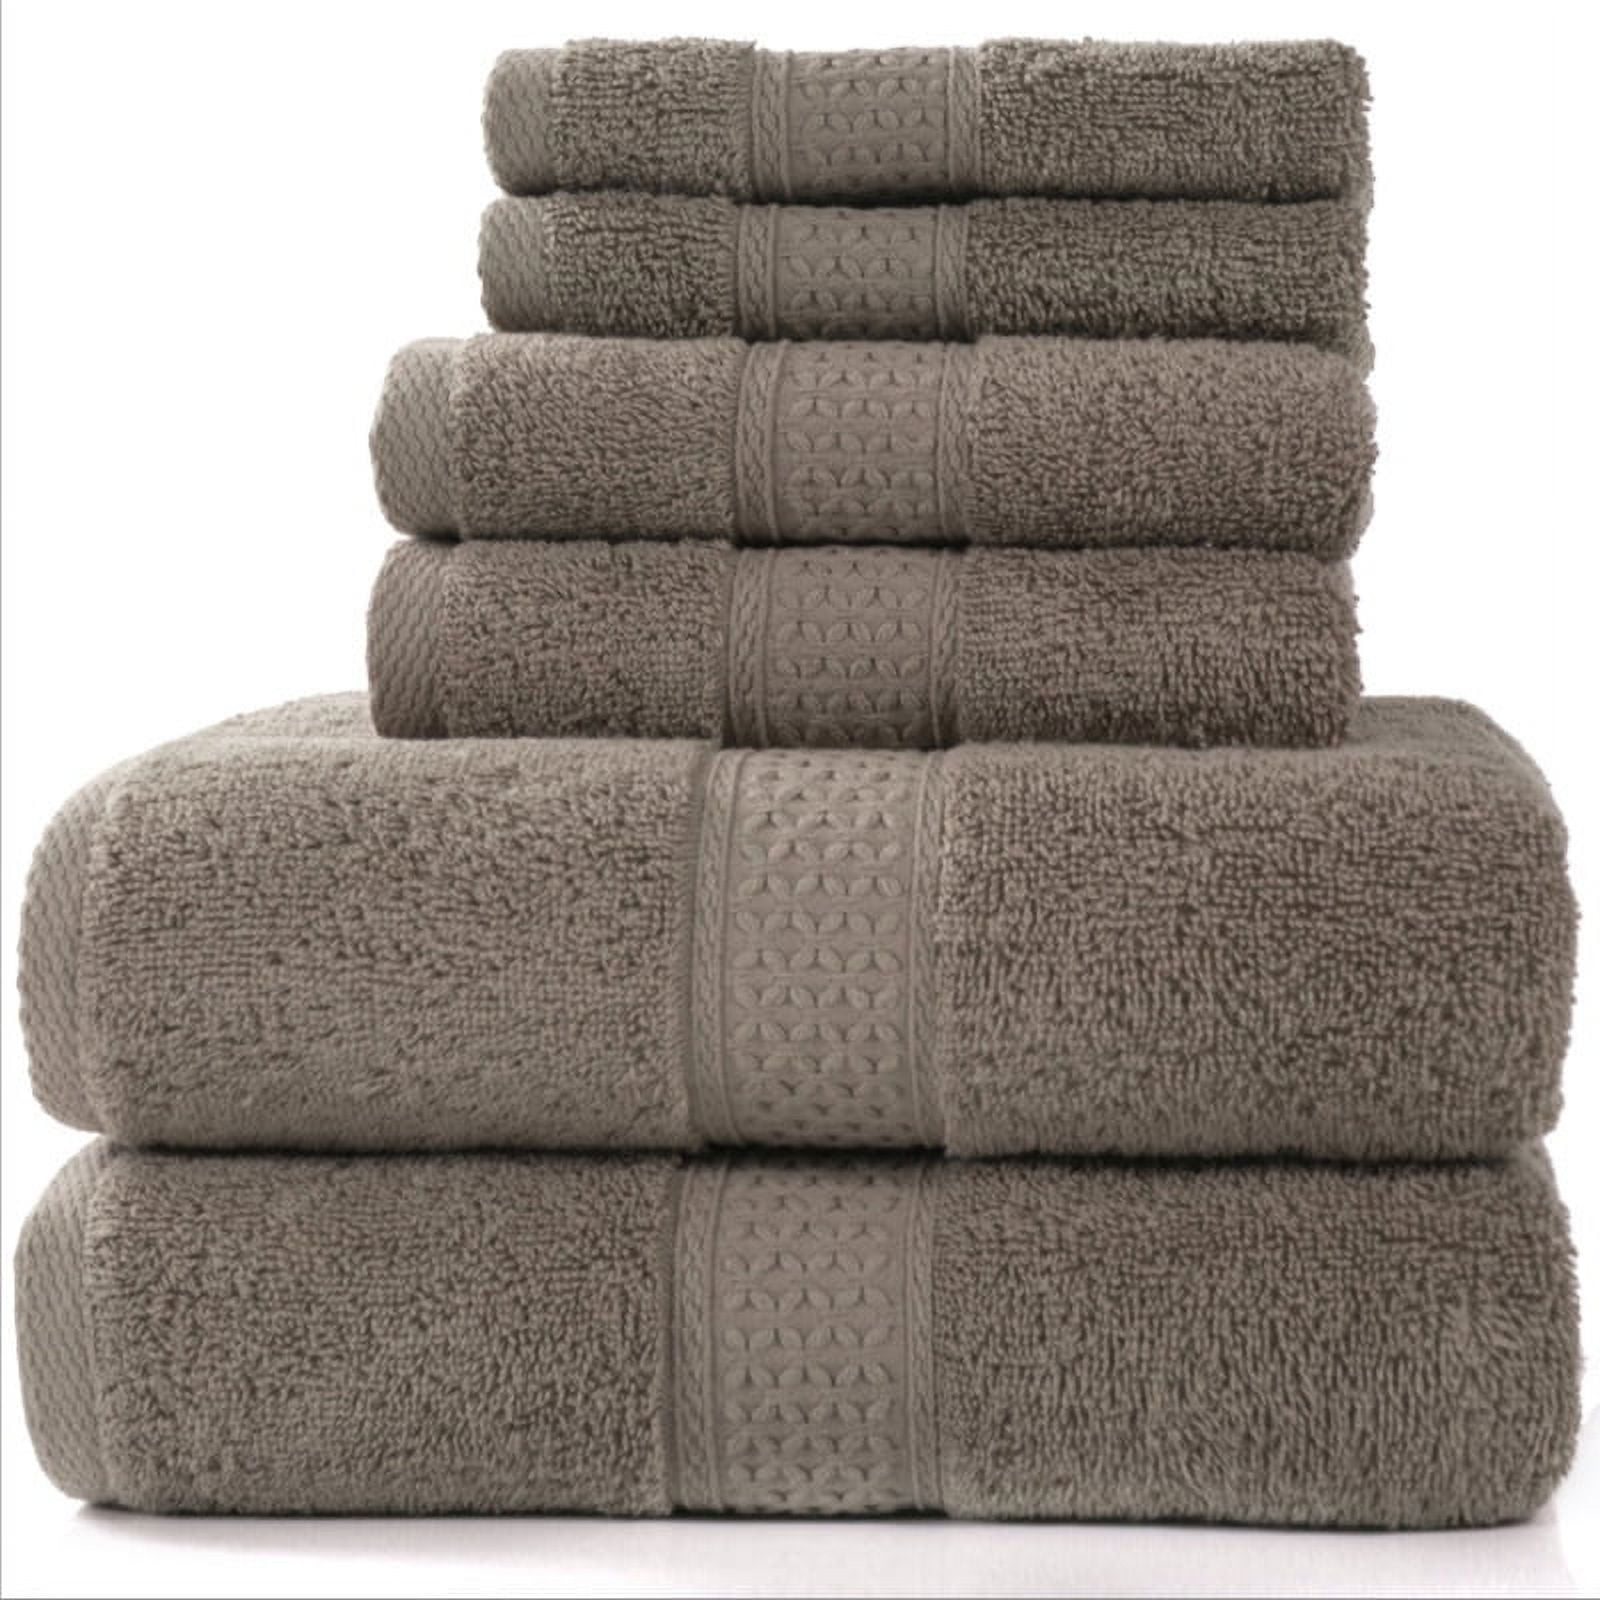 Homgreen Chakir Turkish Linens Luxury Spa and Hotel Quality Premium Turkish  Cotton 6-Piece Towel Set (2 x Bath Towels, 2 x Hand Towels, 2 x Washcloths)  